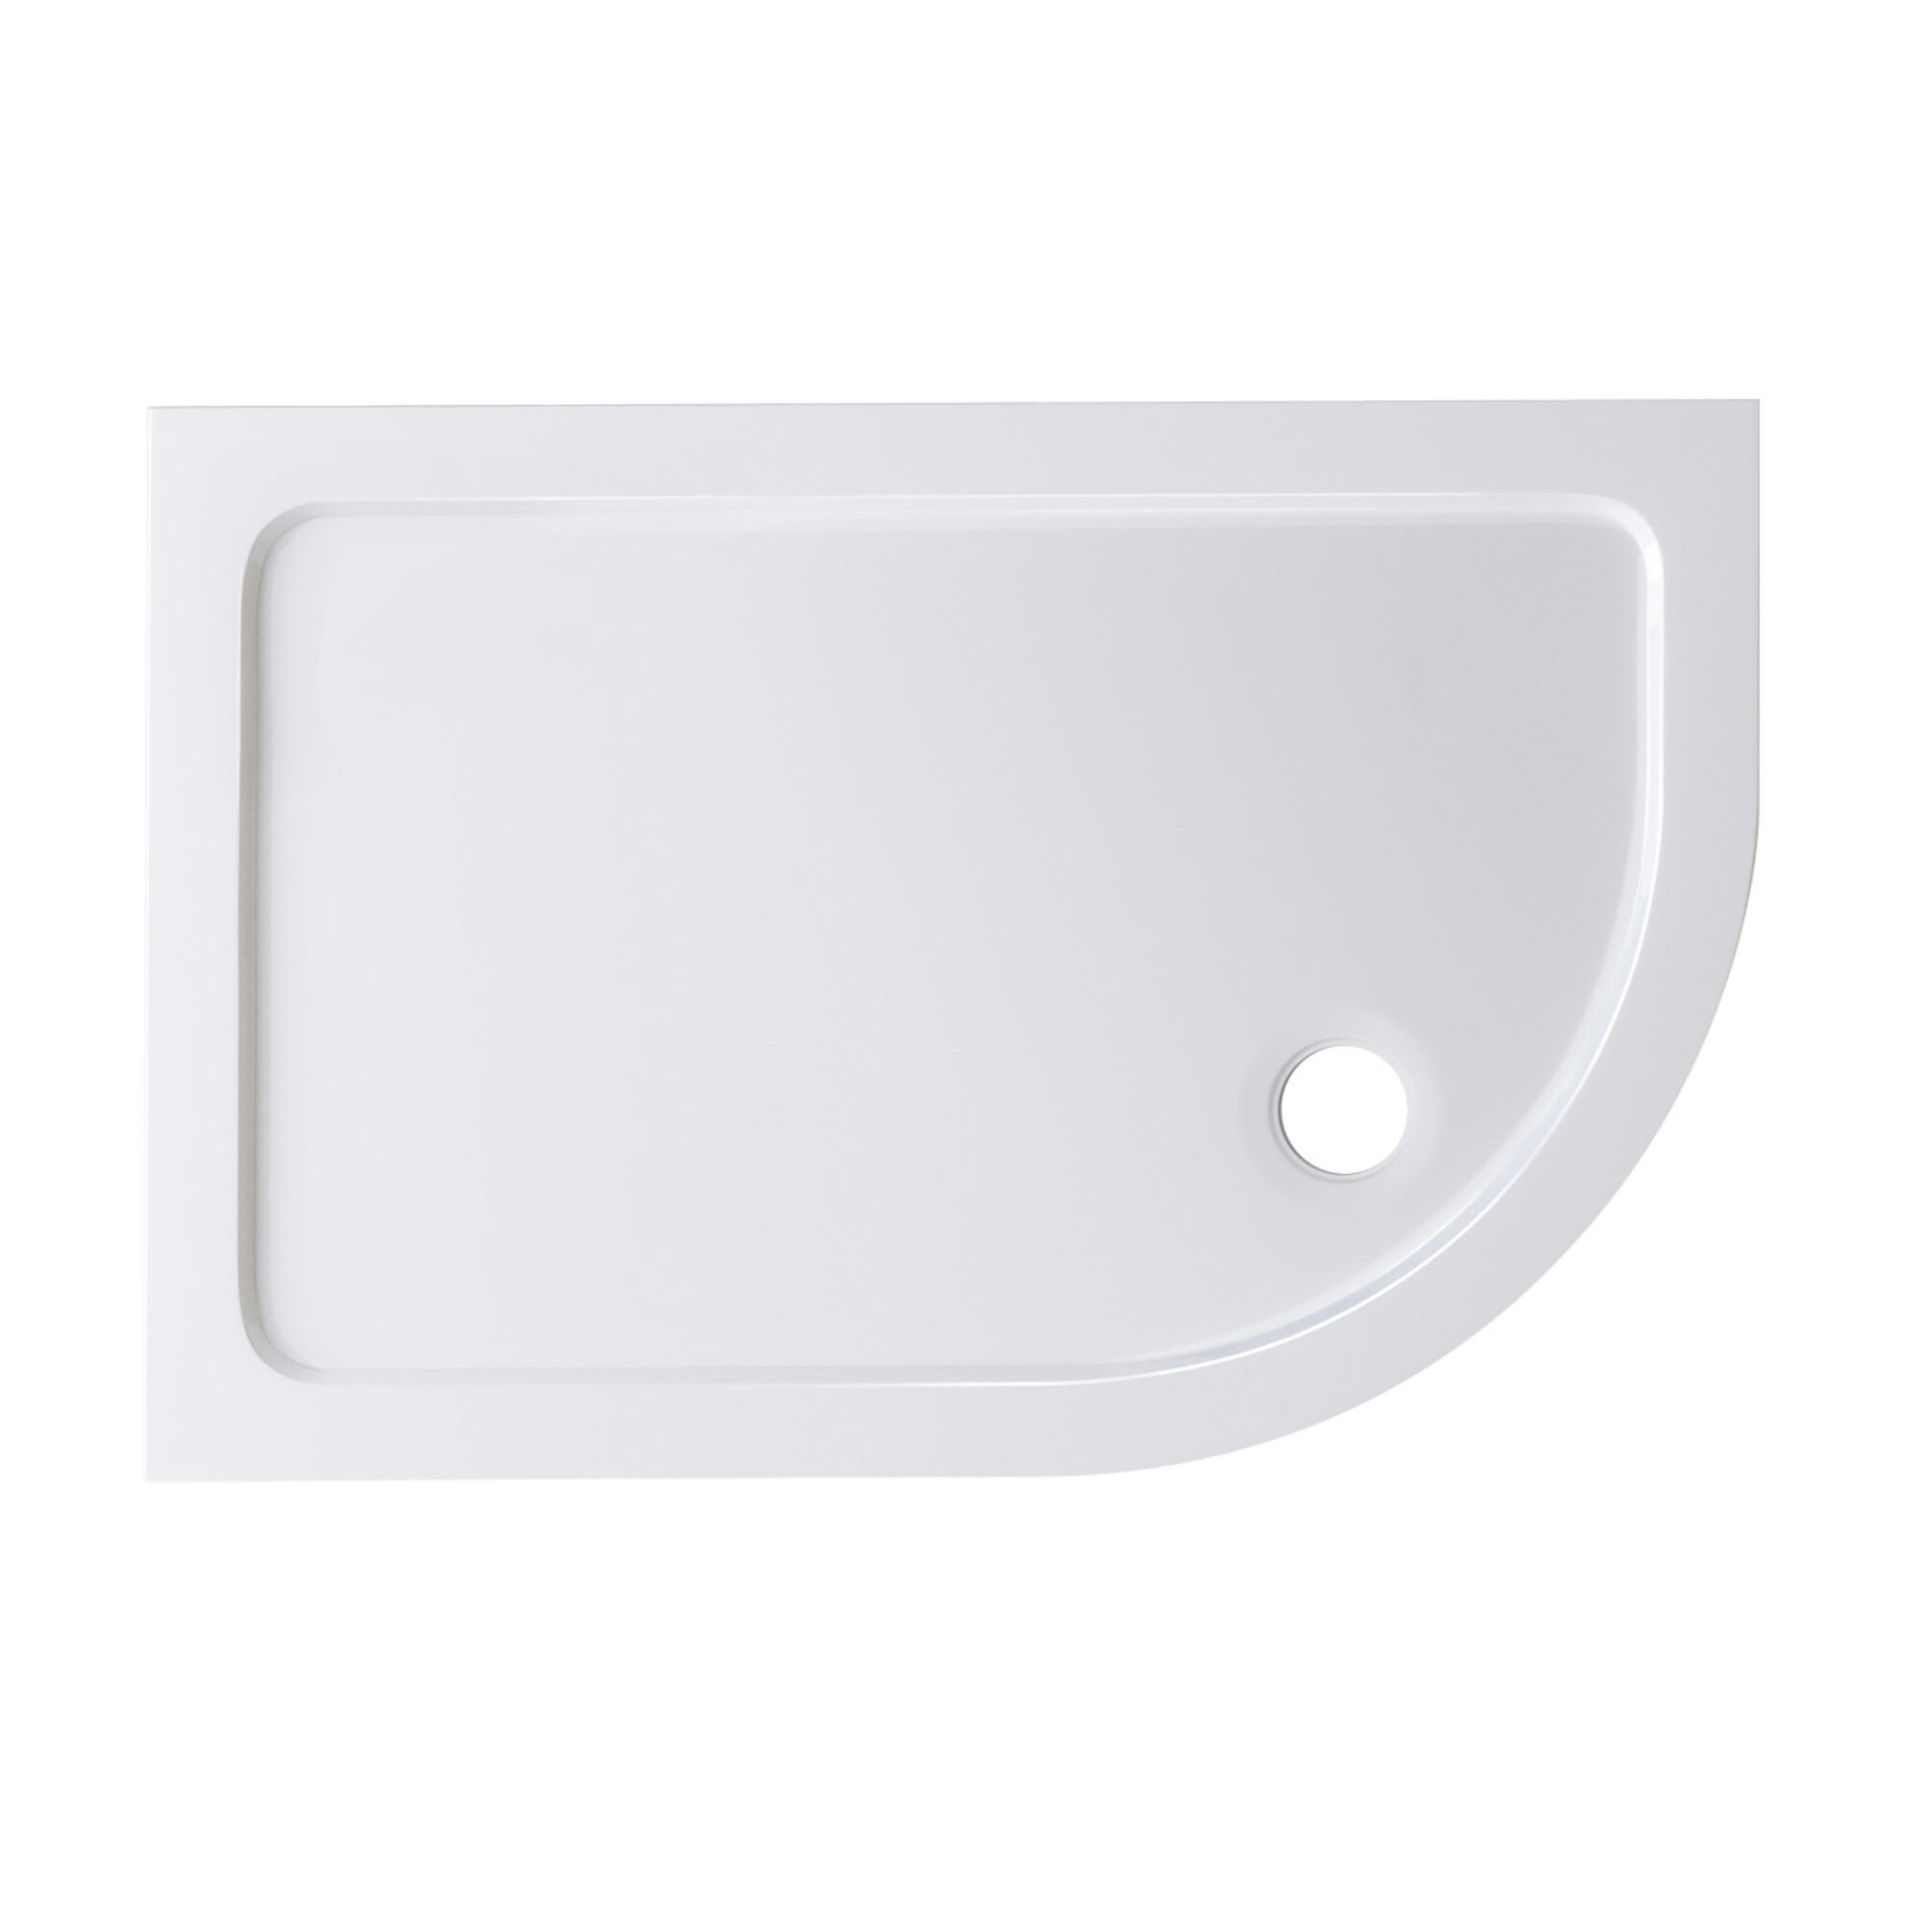 (AD135) 1200x800mm Offset Quadrant Ultra Slim Stone Shower Tray - Right. Low profile ultra slim